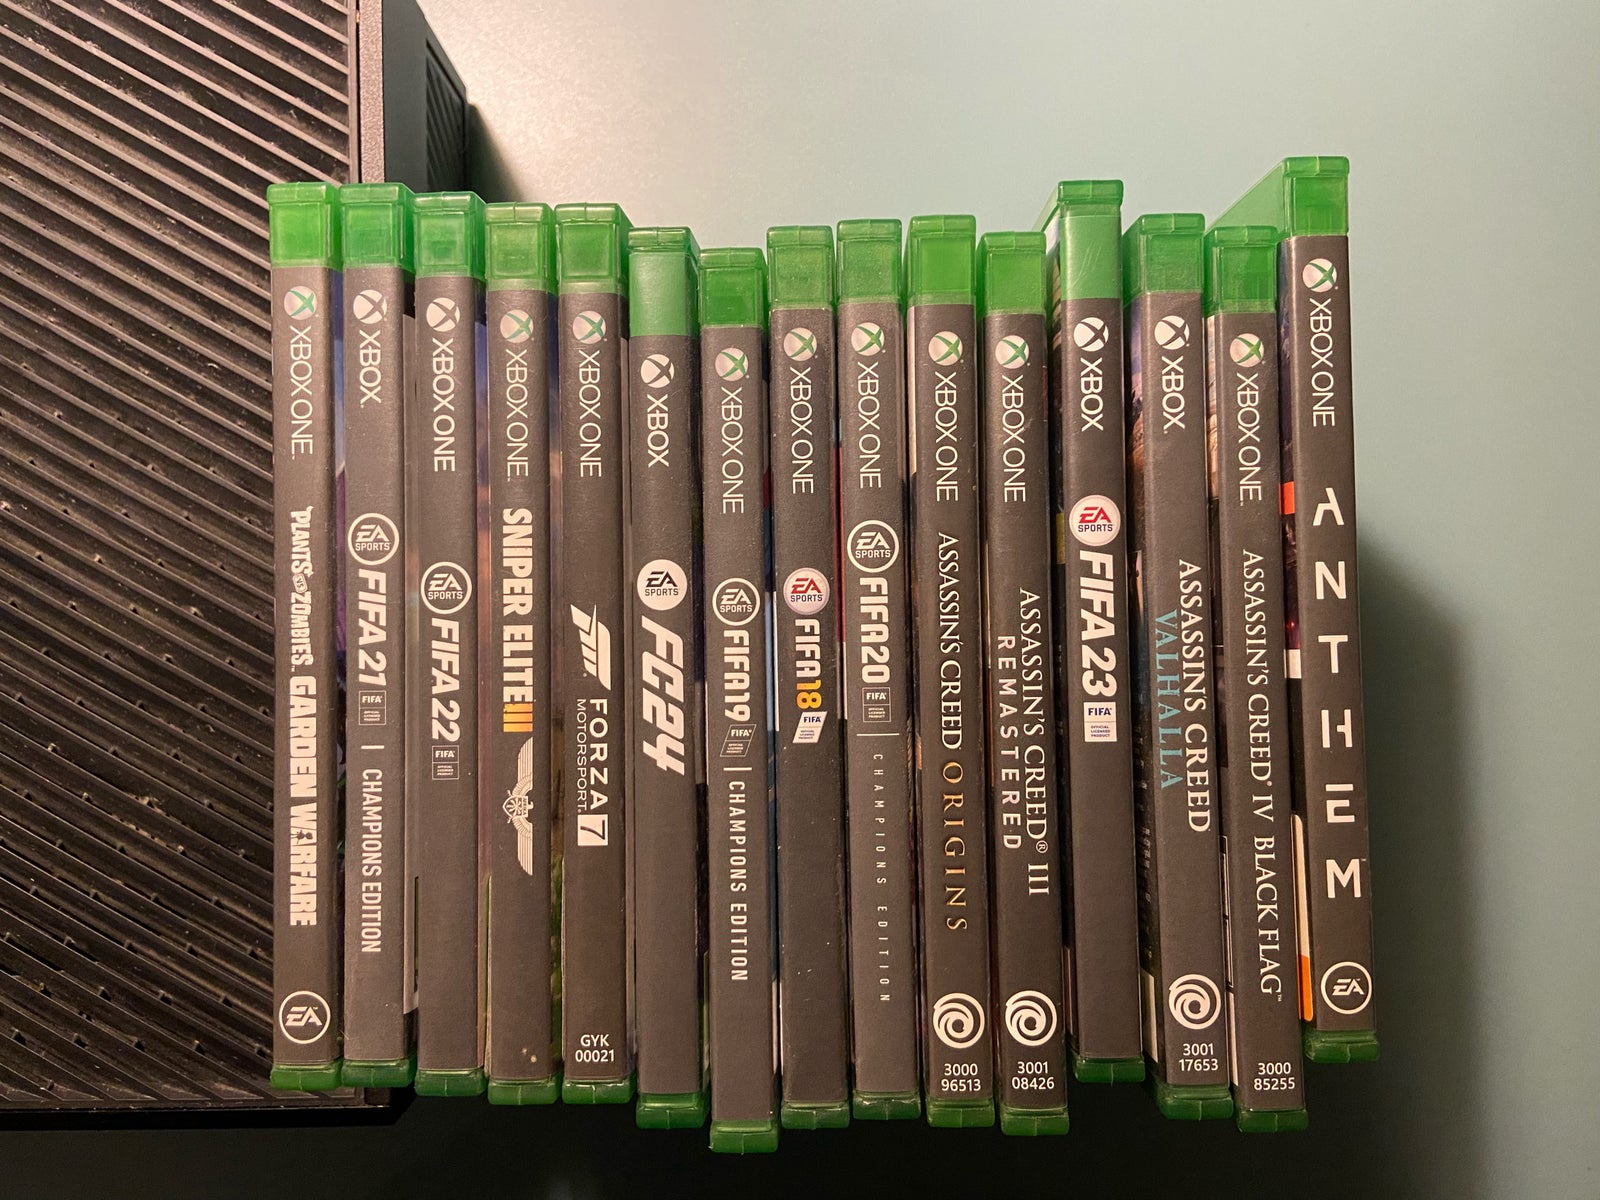 Xbox One, God